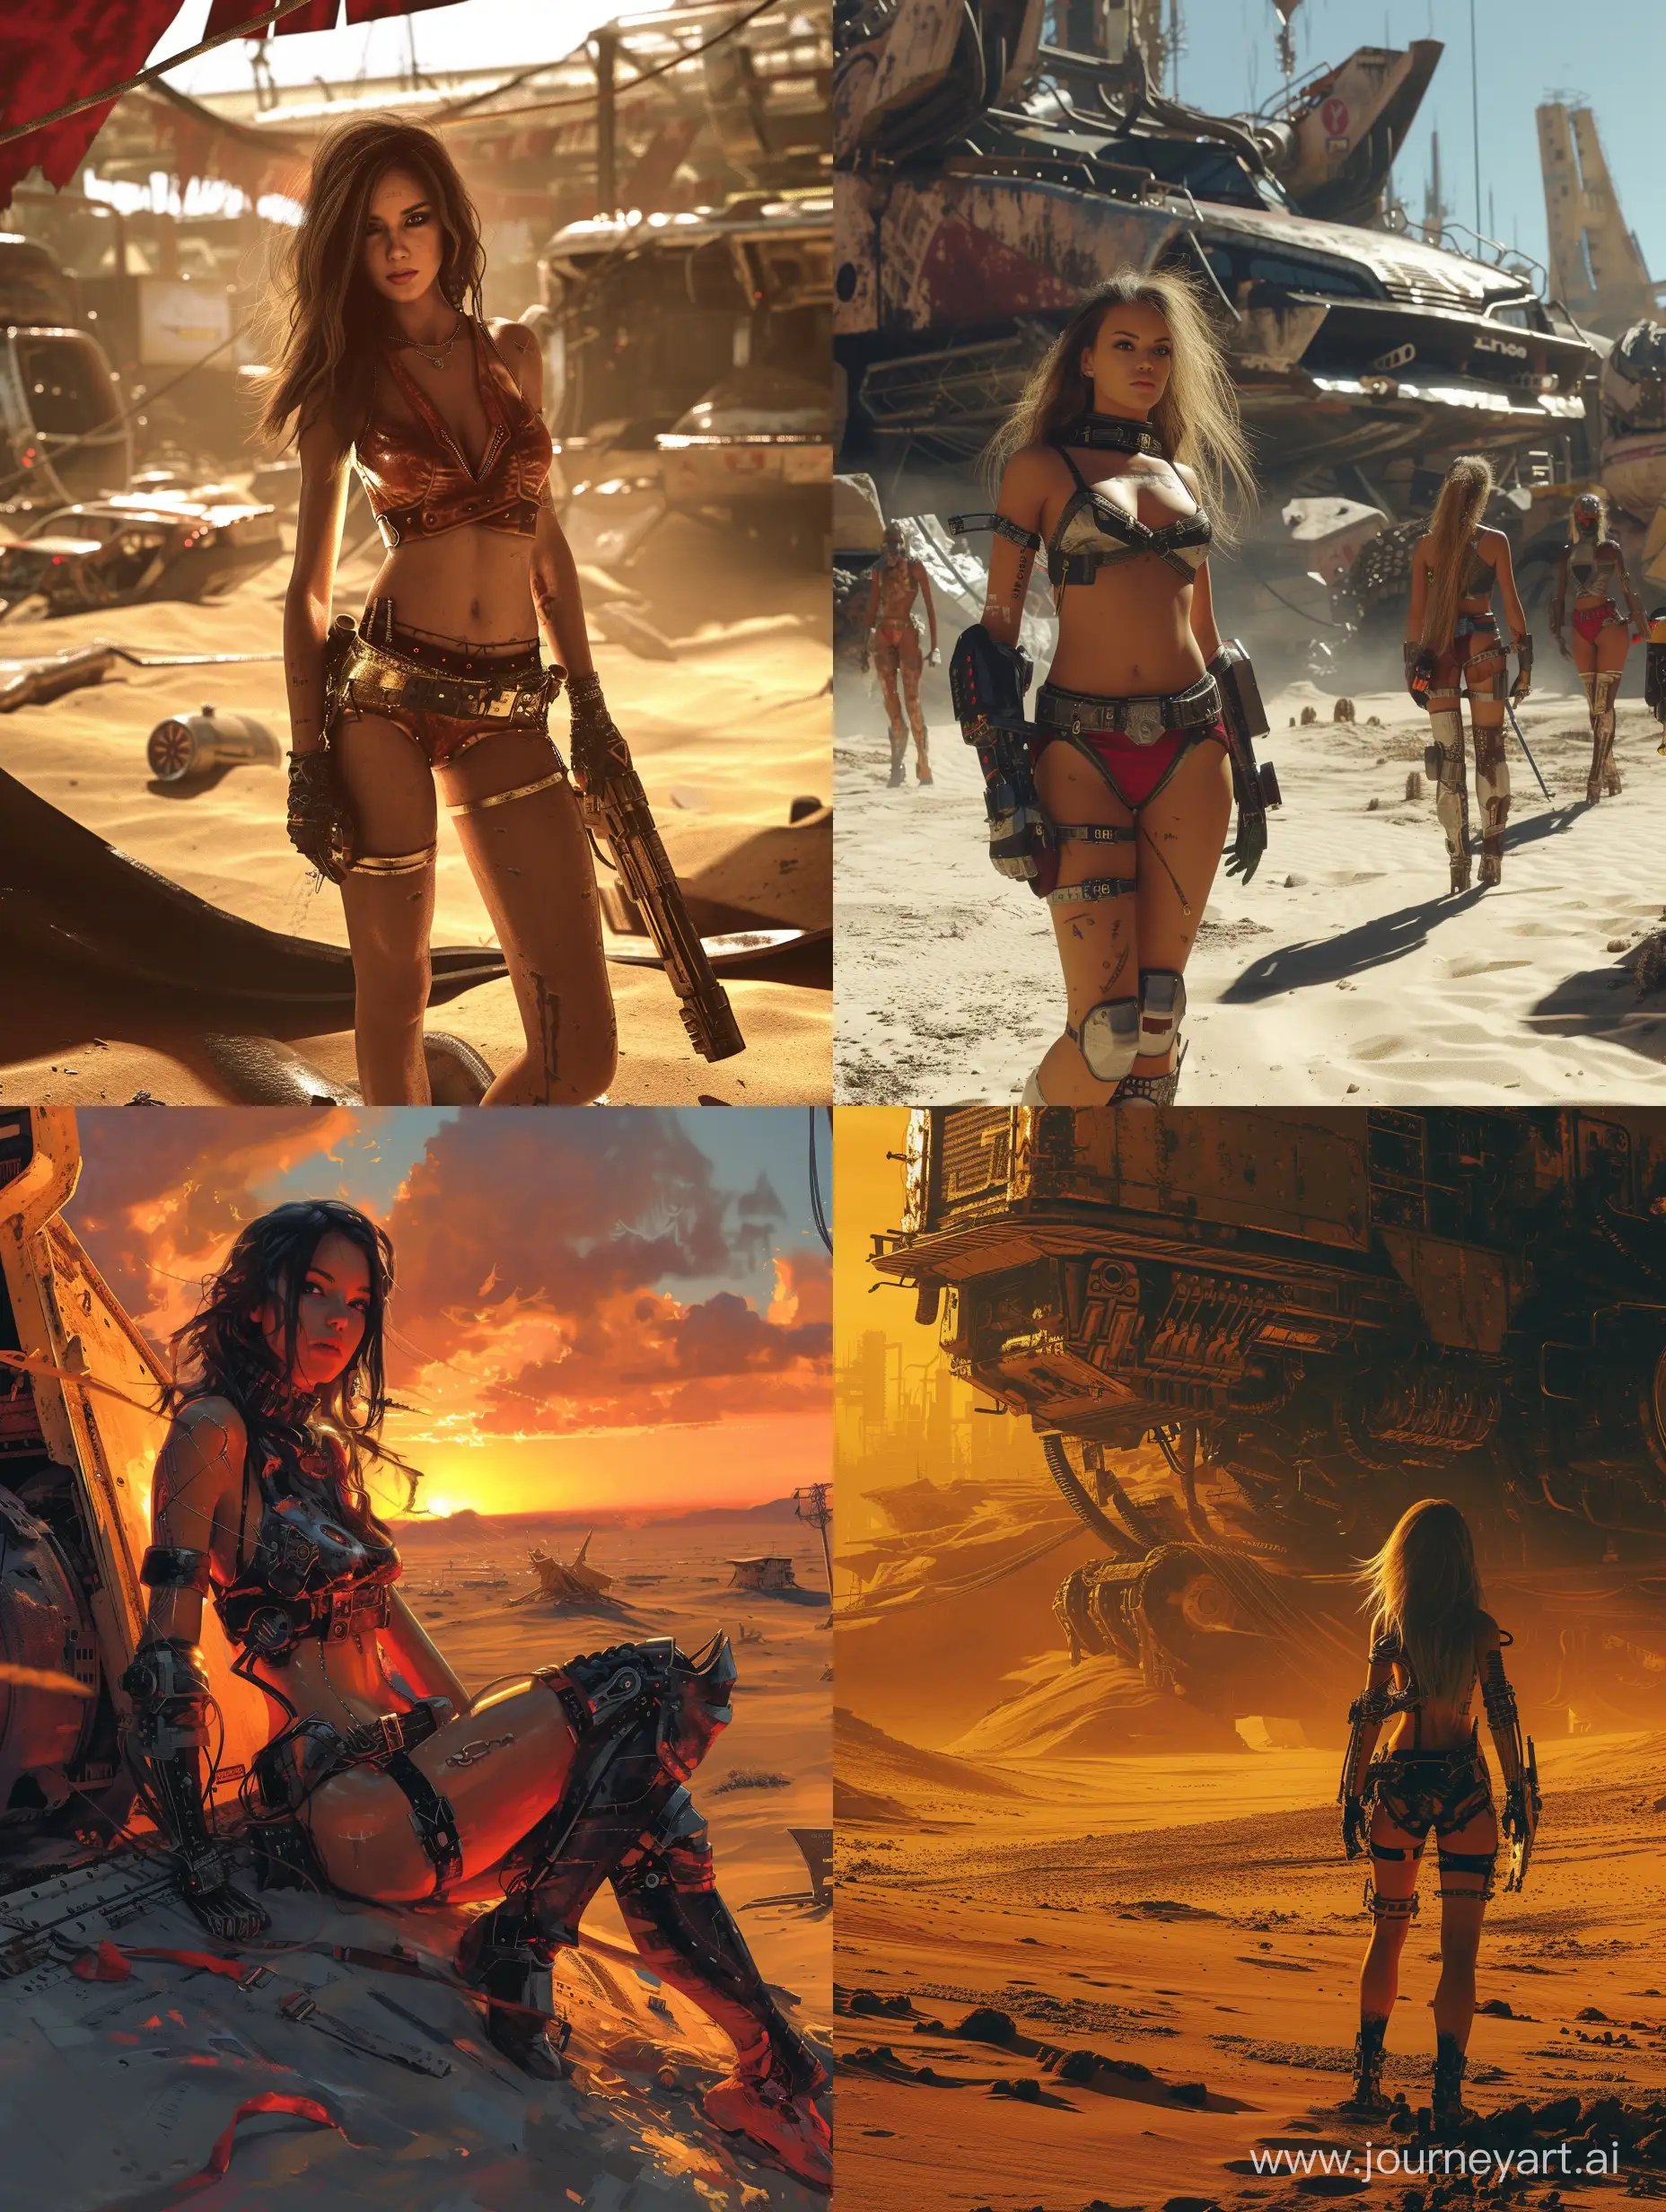 Apocalyptic wasteland, Cyberpunk, metal, Desert, Sexy women, high detail, 4k, 8k quality, glow